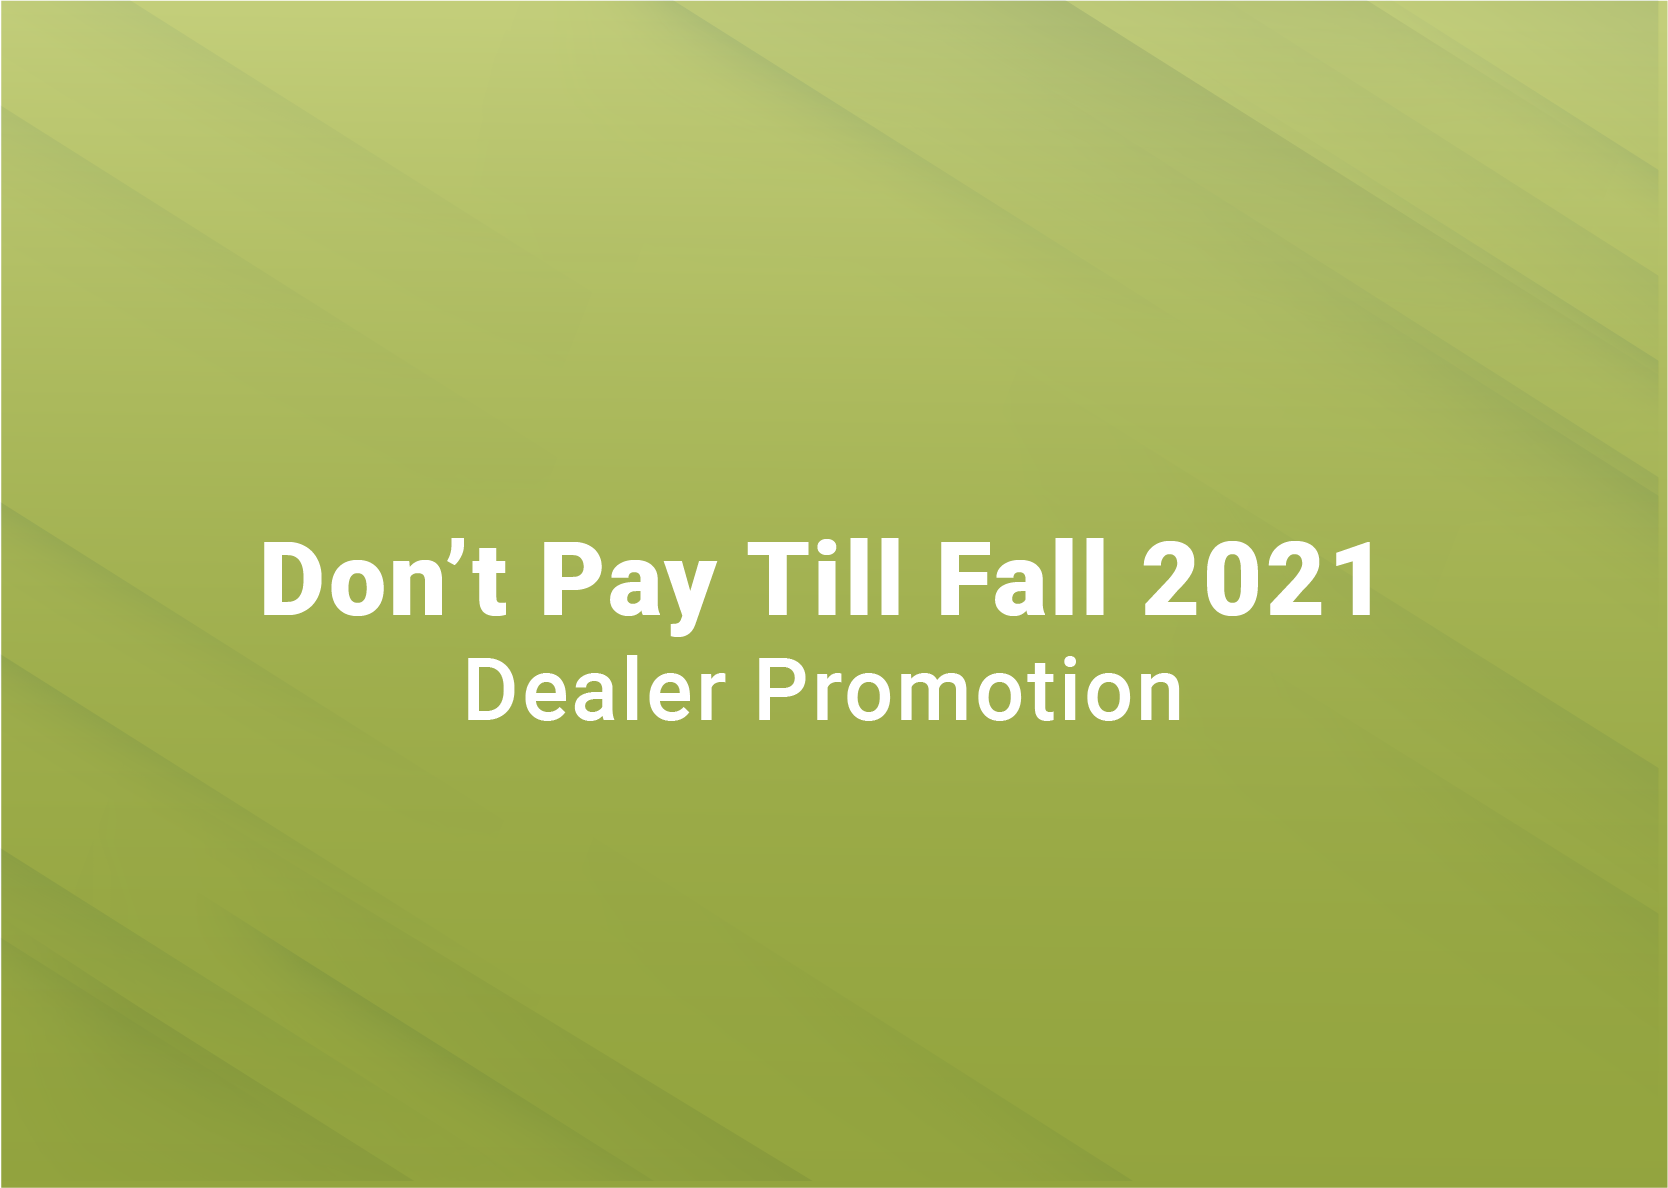 don't pay till fall 2021: Dealer promotion